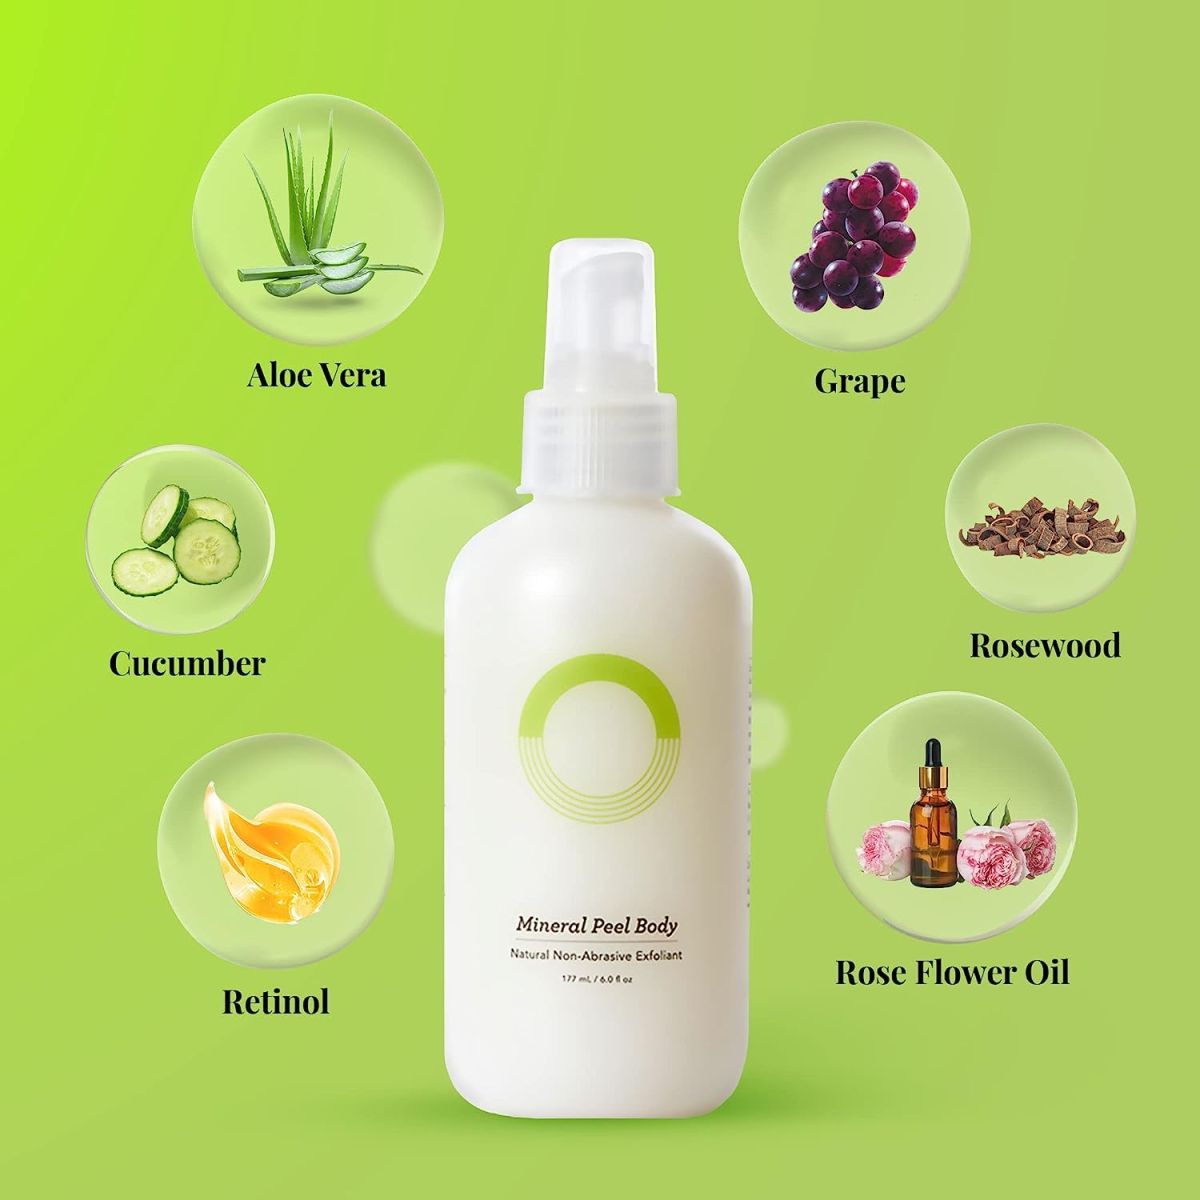 ORG Body Scrub Deep Gel Exfoliator for Glowing and Smooth Skin - Korean Exfoliating Peel Skincare - Natural Cruelty Free Formulation for Sensitive Skin 6oz